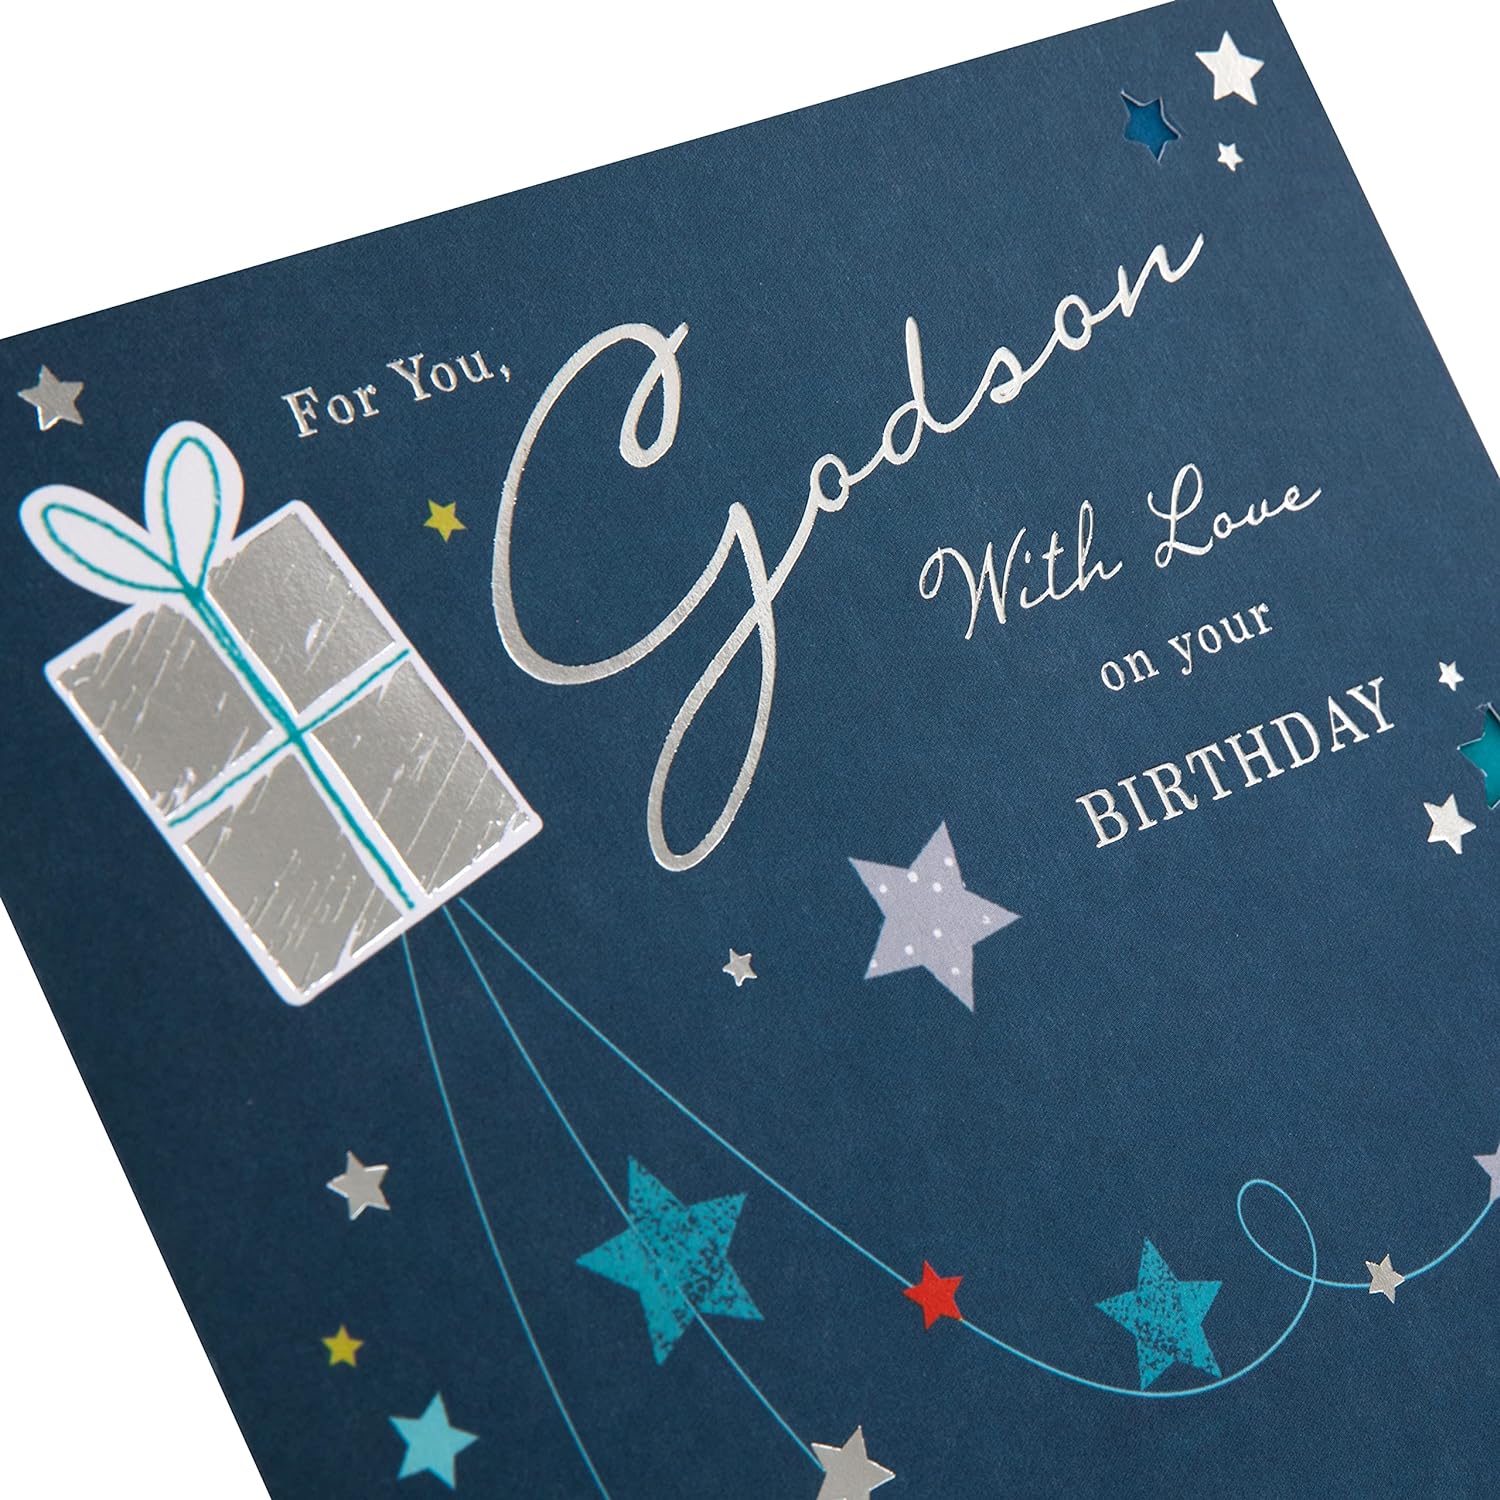 Hallmark Godson Birthday Card 'Special' - Medium